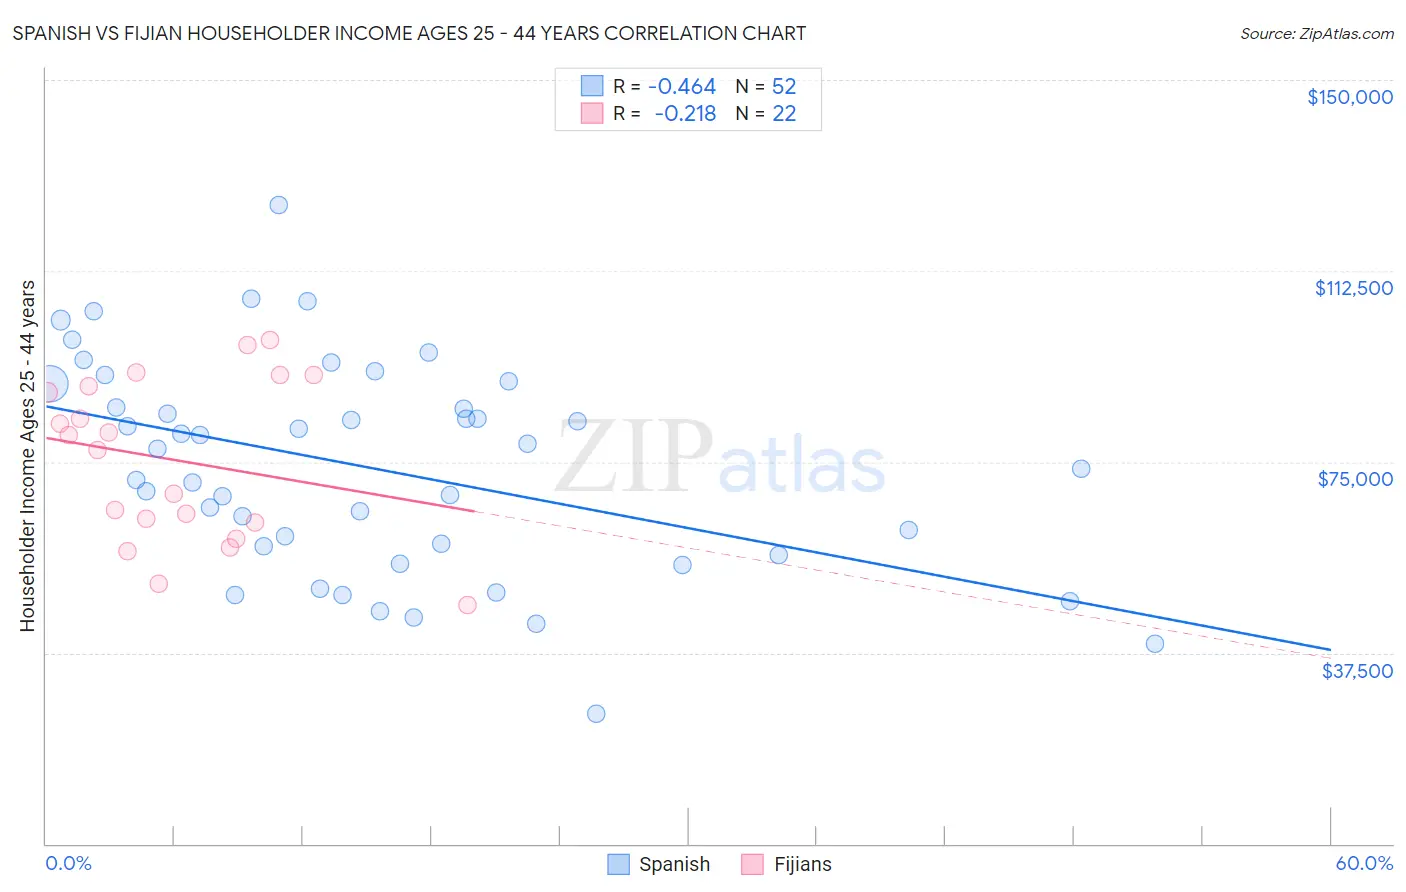 Spanish vs Fijian Householder Income Ages 25 - 44 years